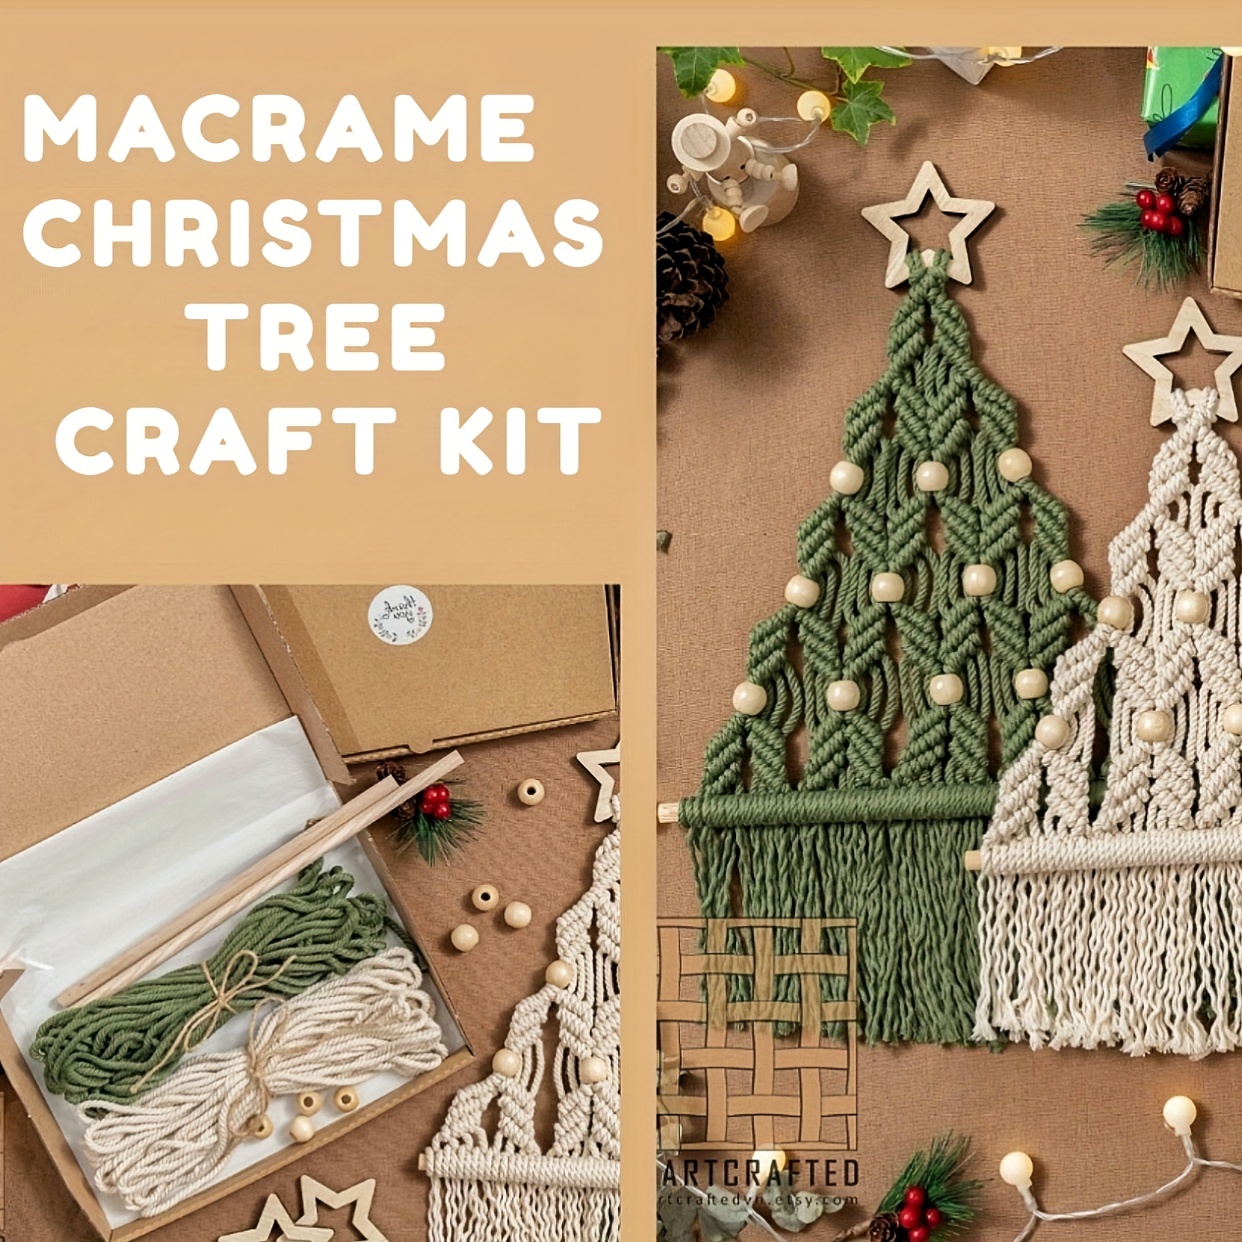 New Christmas Craft Supplies! 